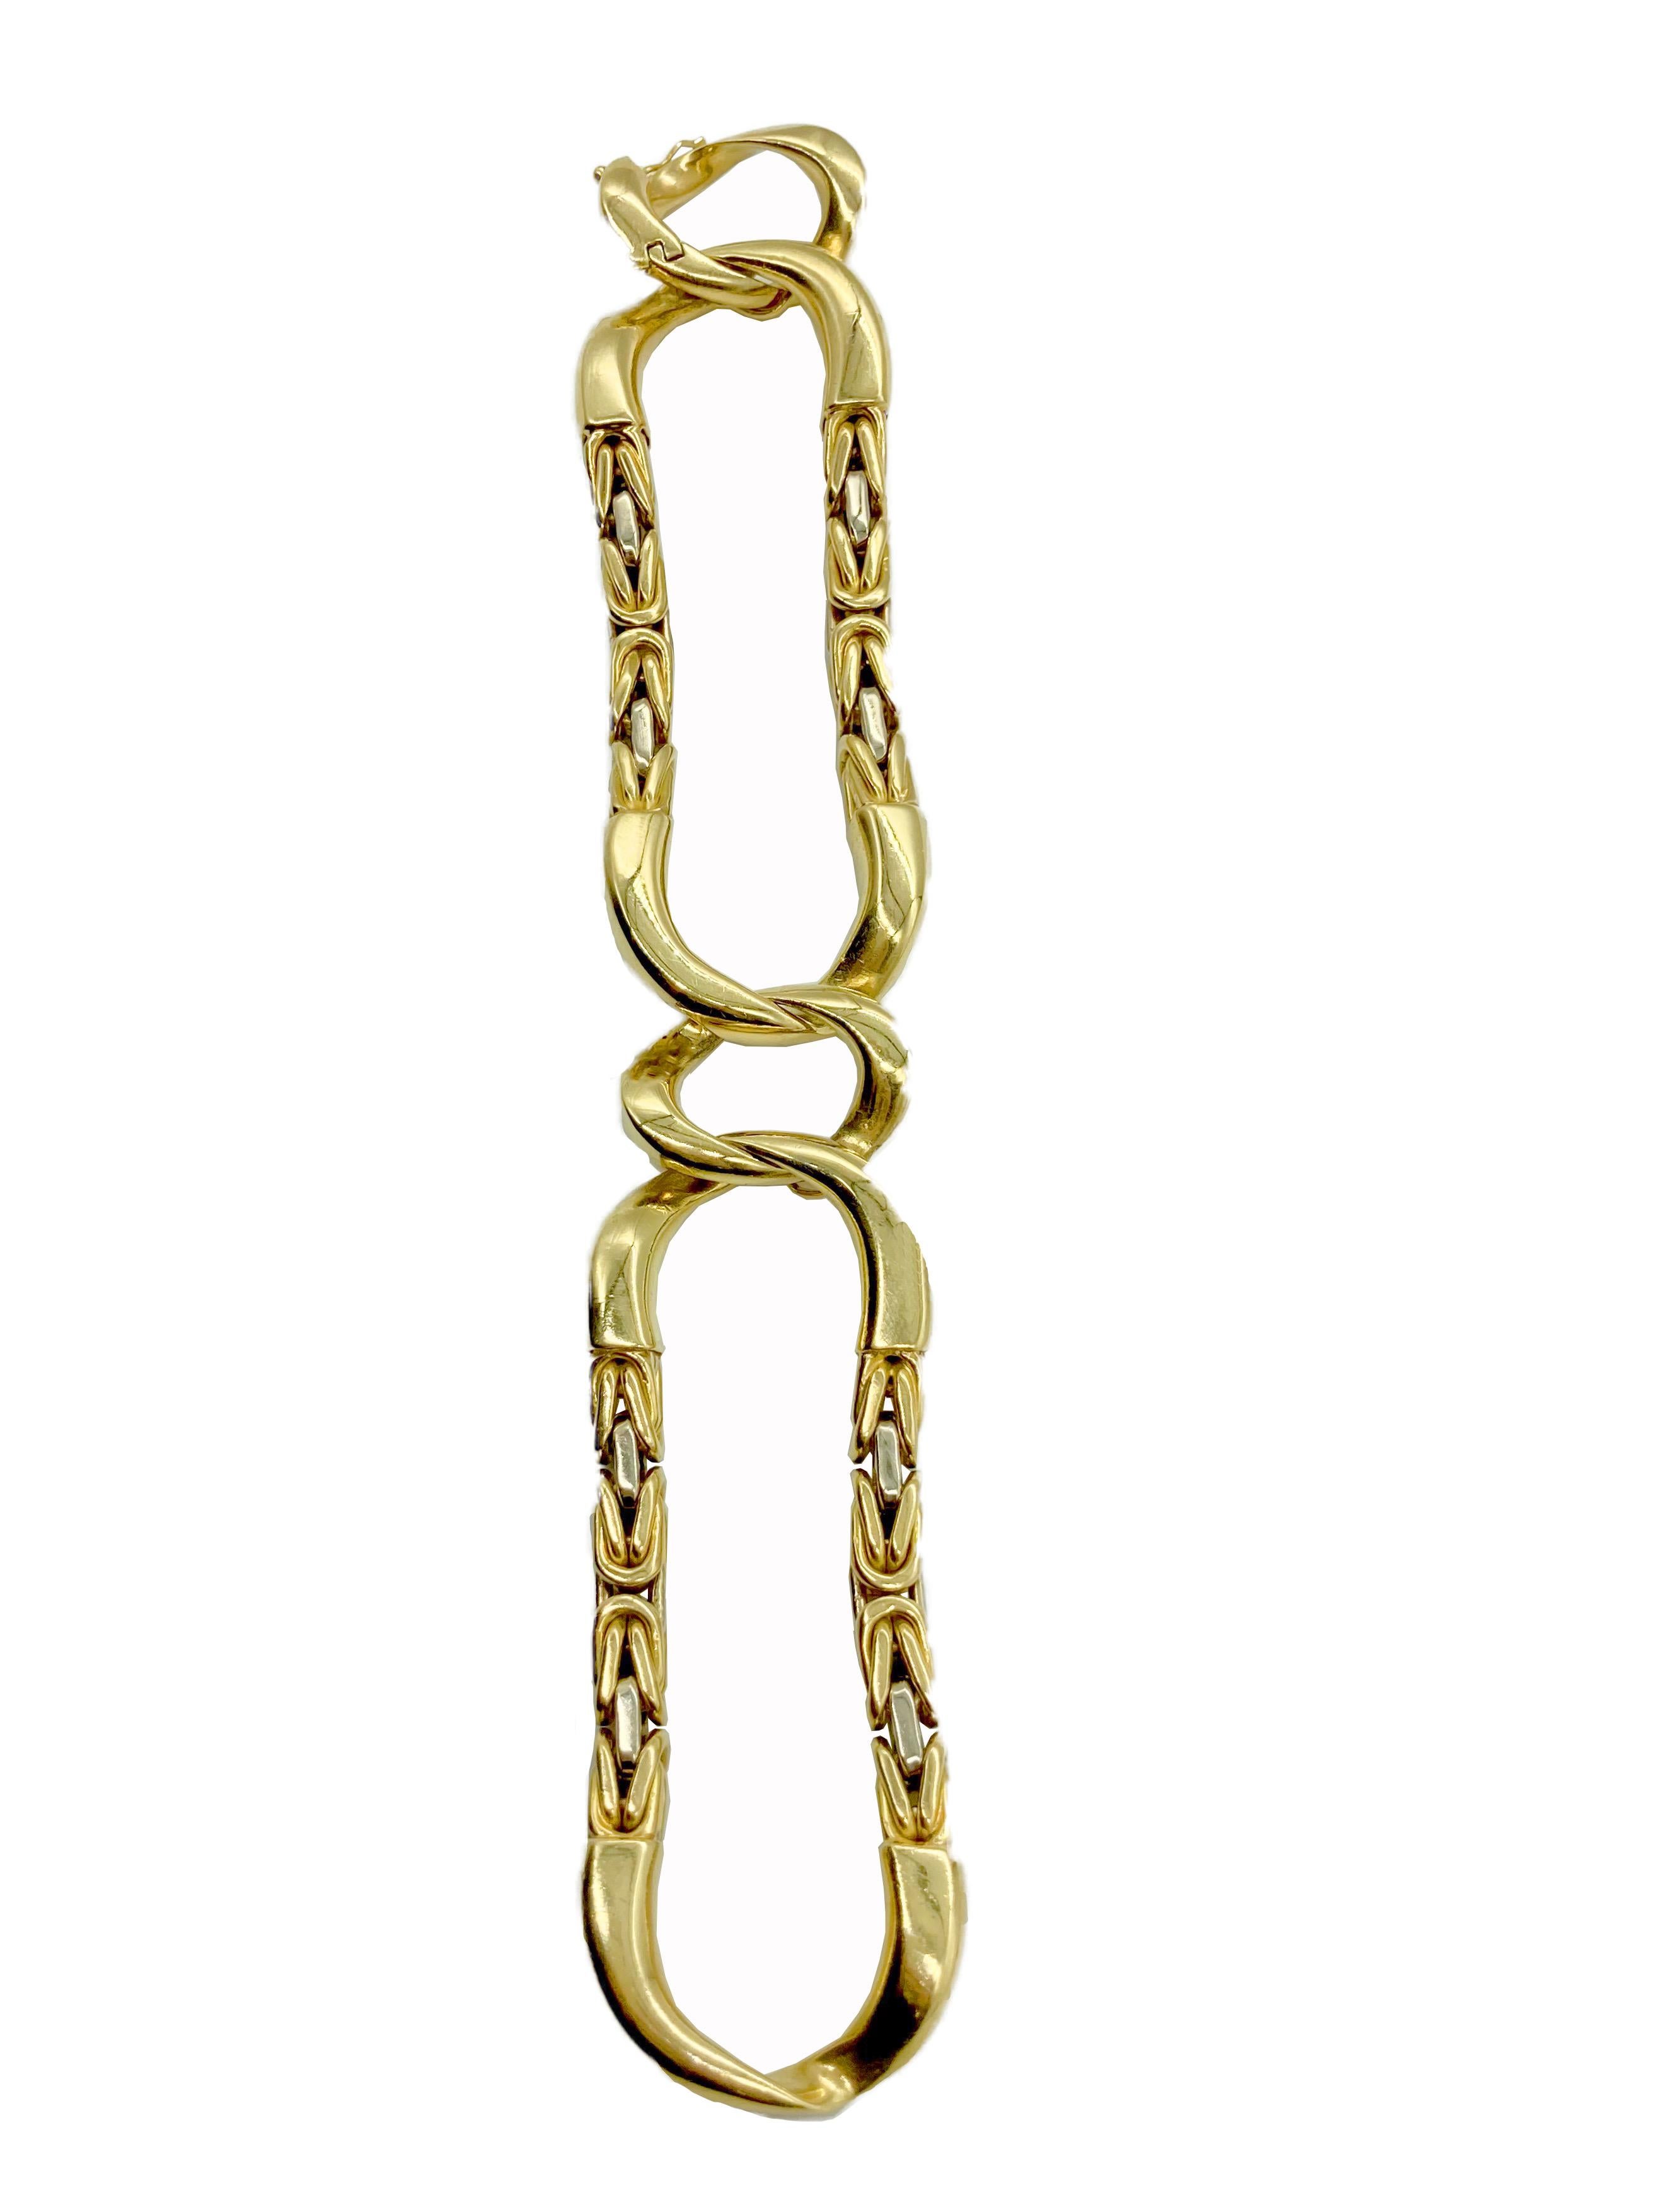 Bulgari 18 Karat Yellow Gold Link Bracelet in Original Box In Good Condition For Sale In New York, NY